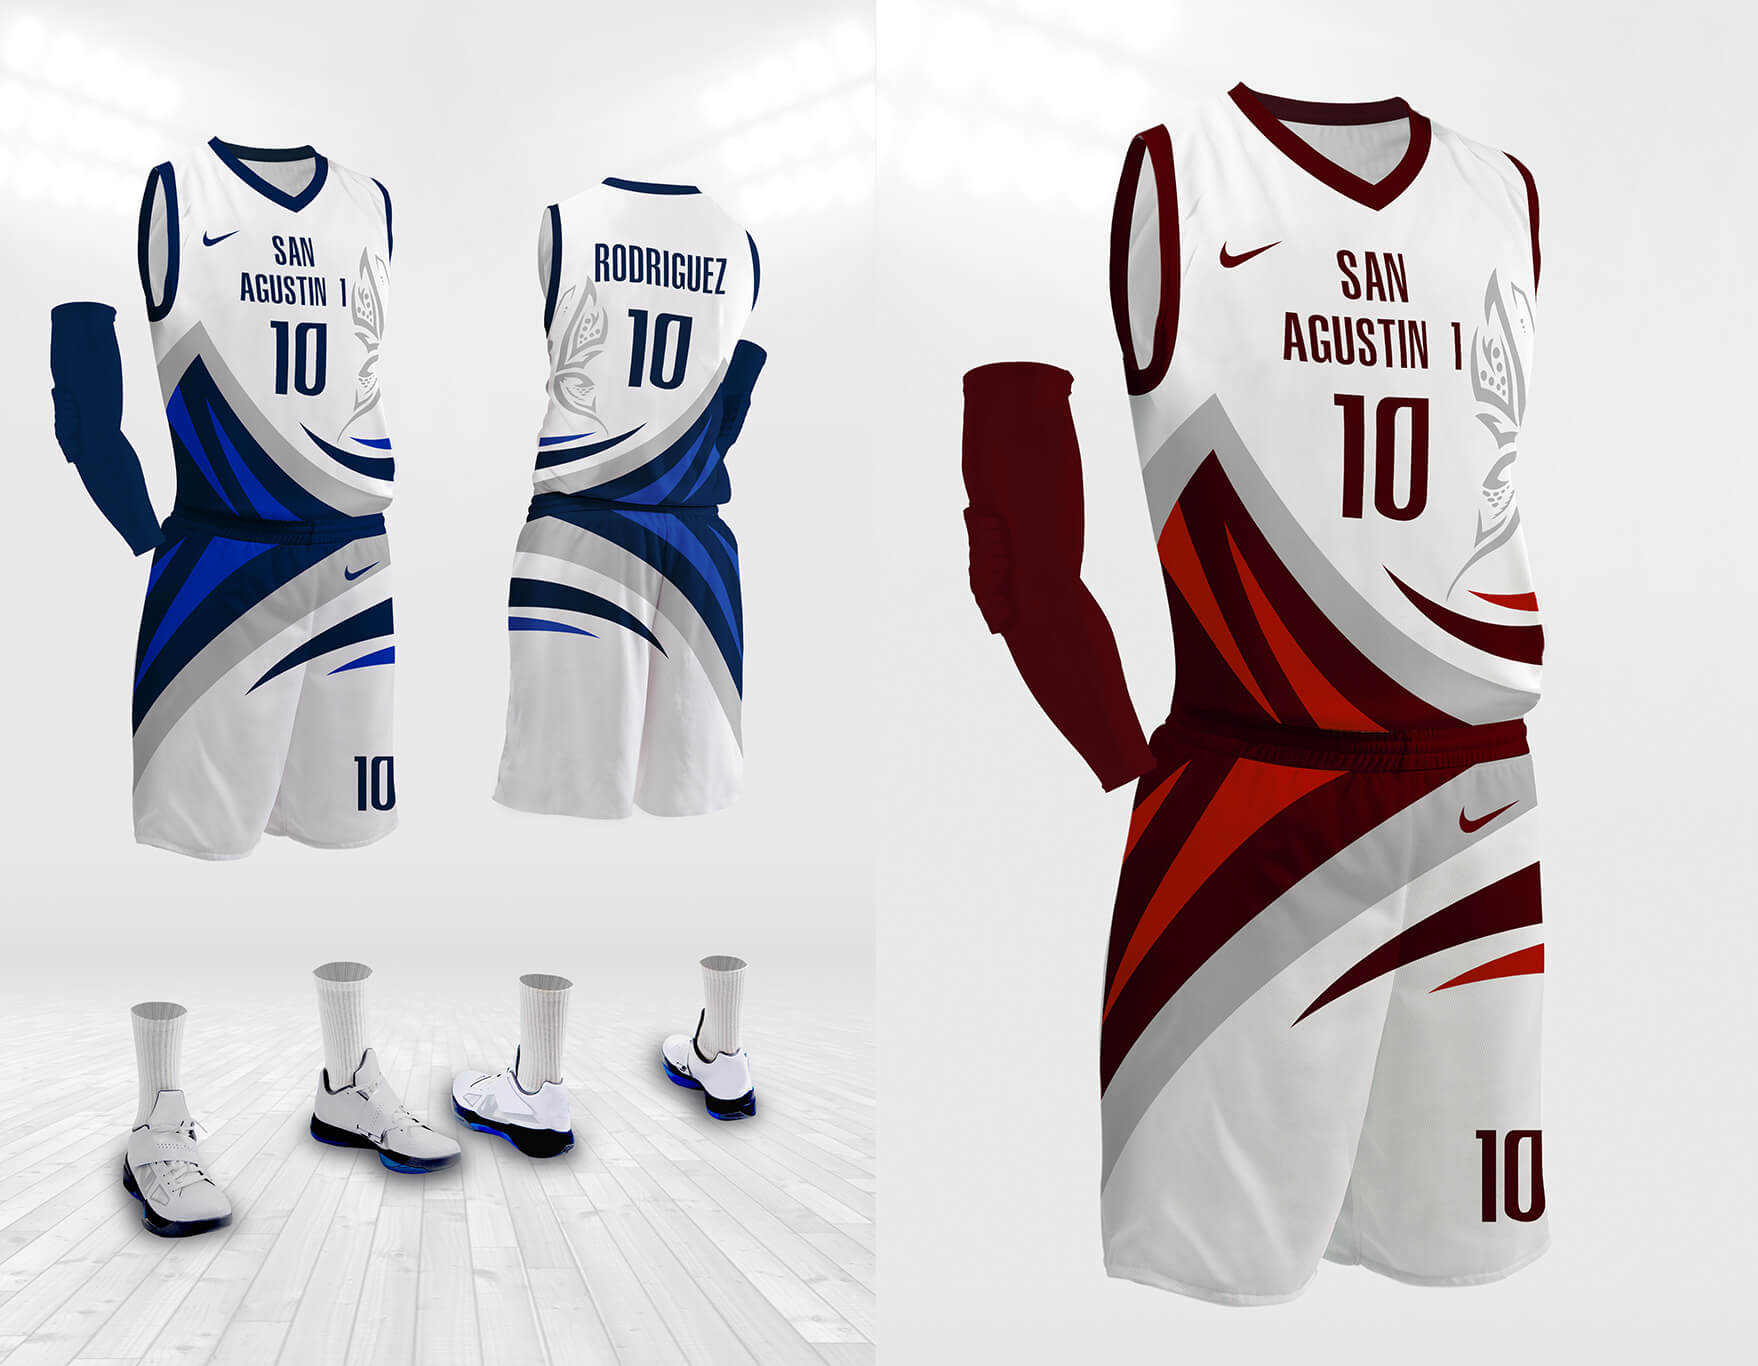 San Agustin Full set Basketball Uniform Jersey Mockup PSD Free - PsFiles